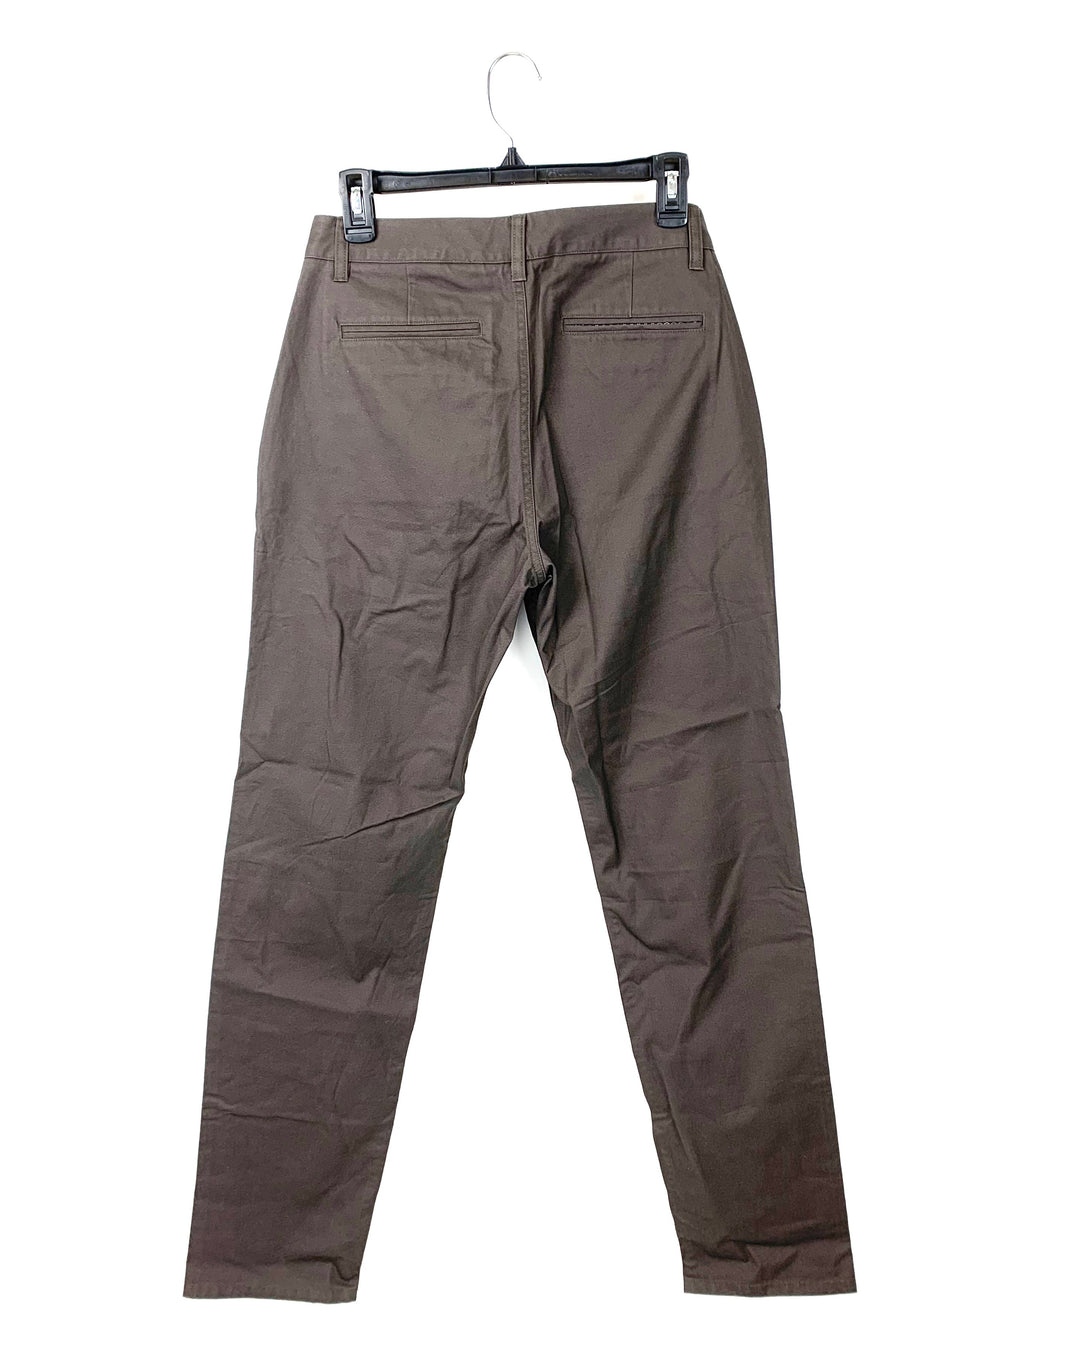 MENS Brown Pants - Size 28/32